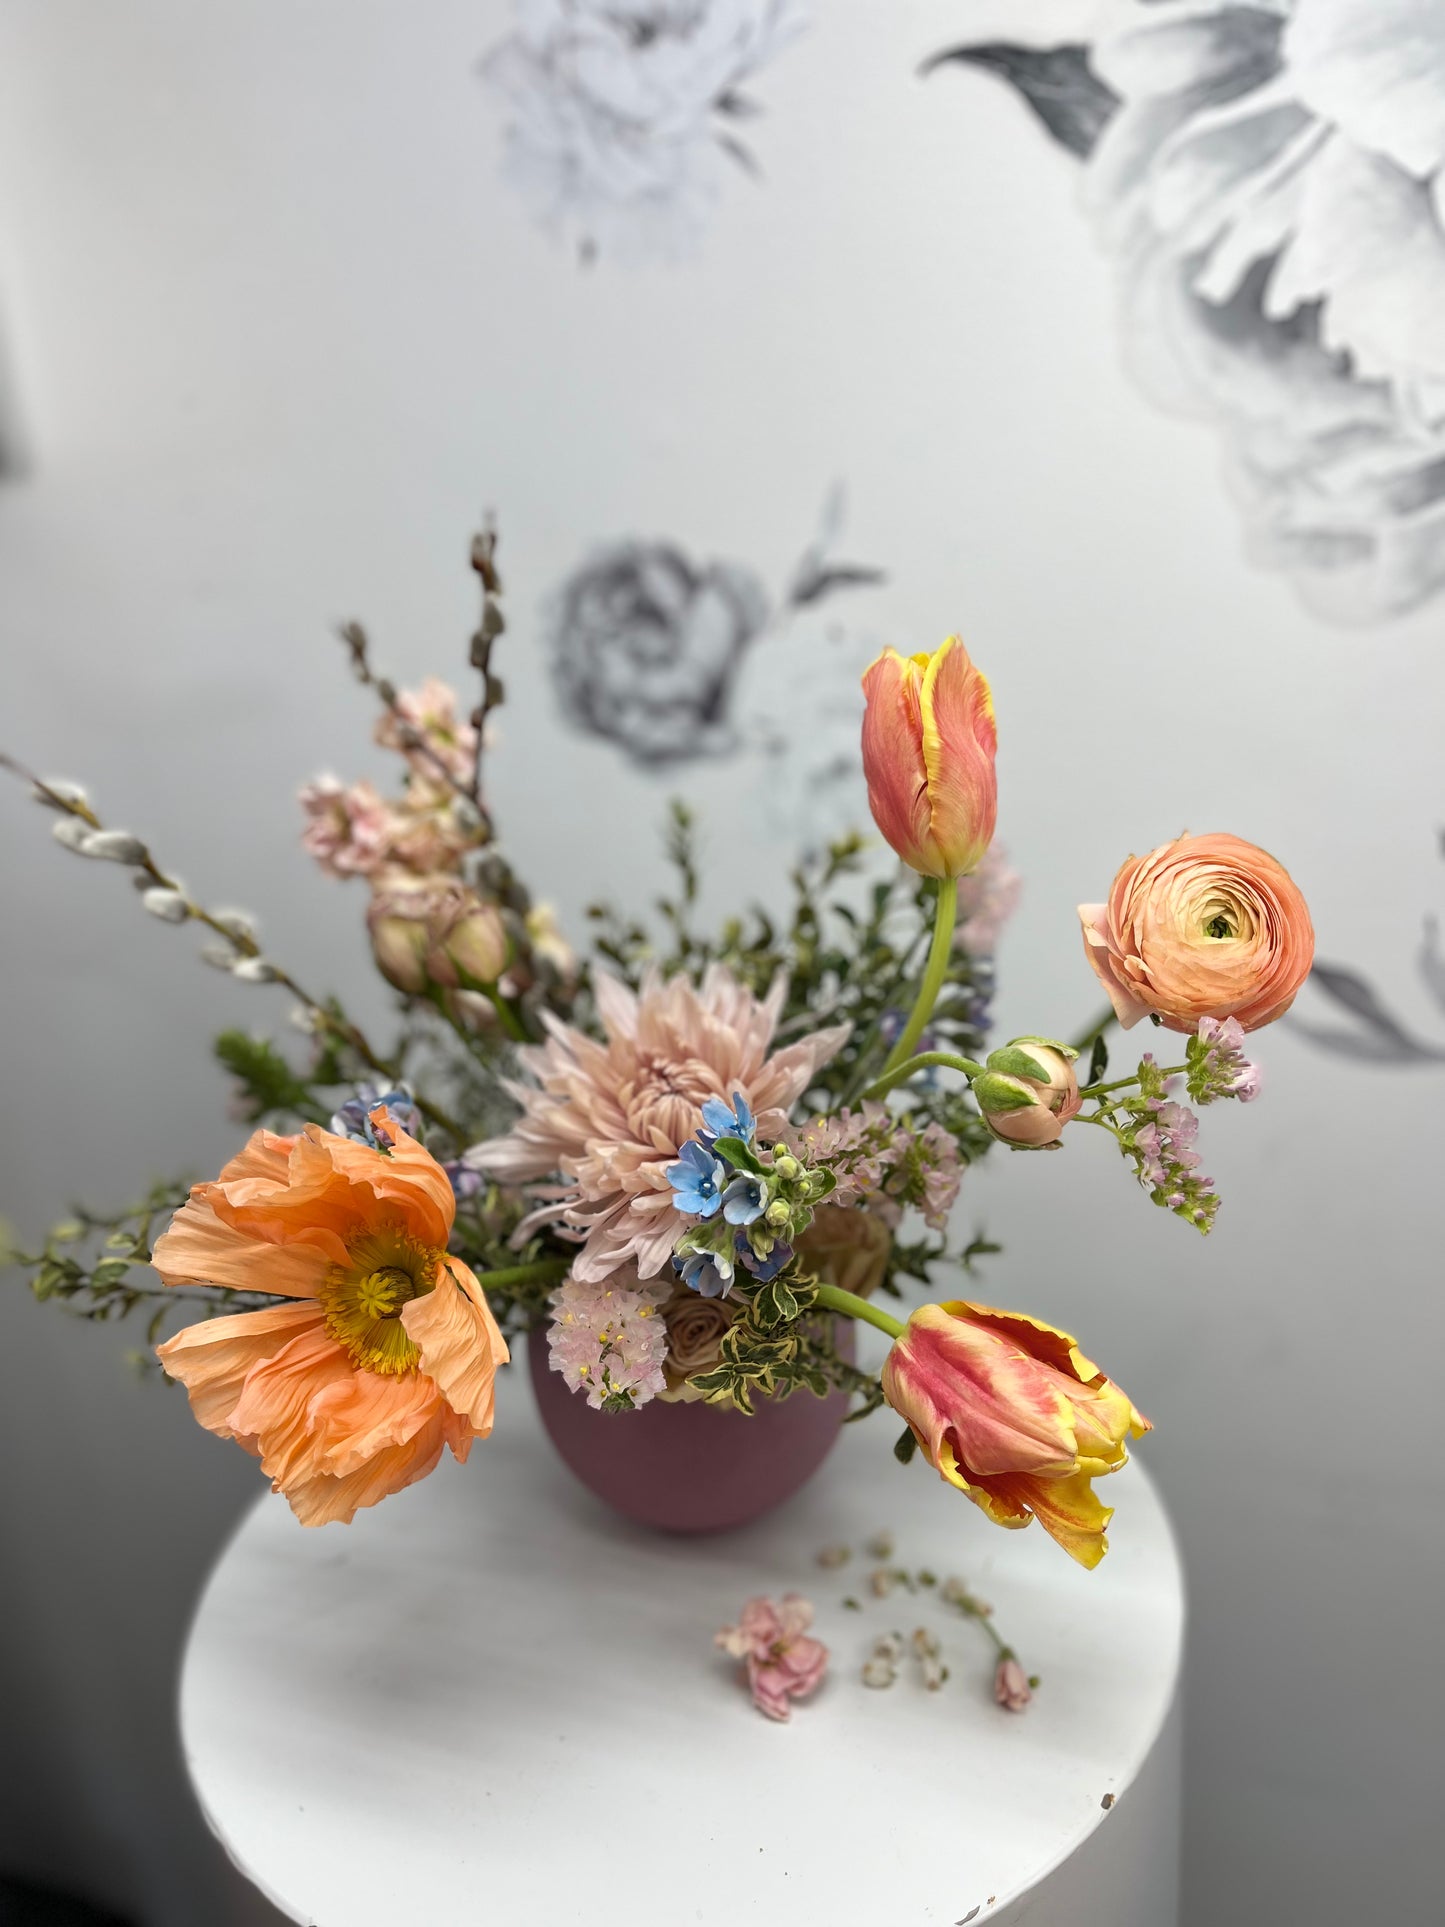 Mother’s Day- Medium vase arrangement